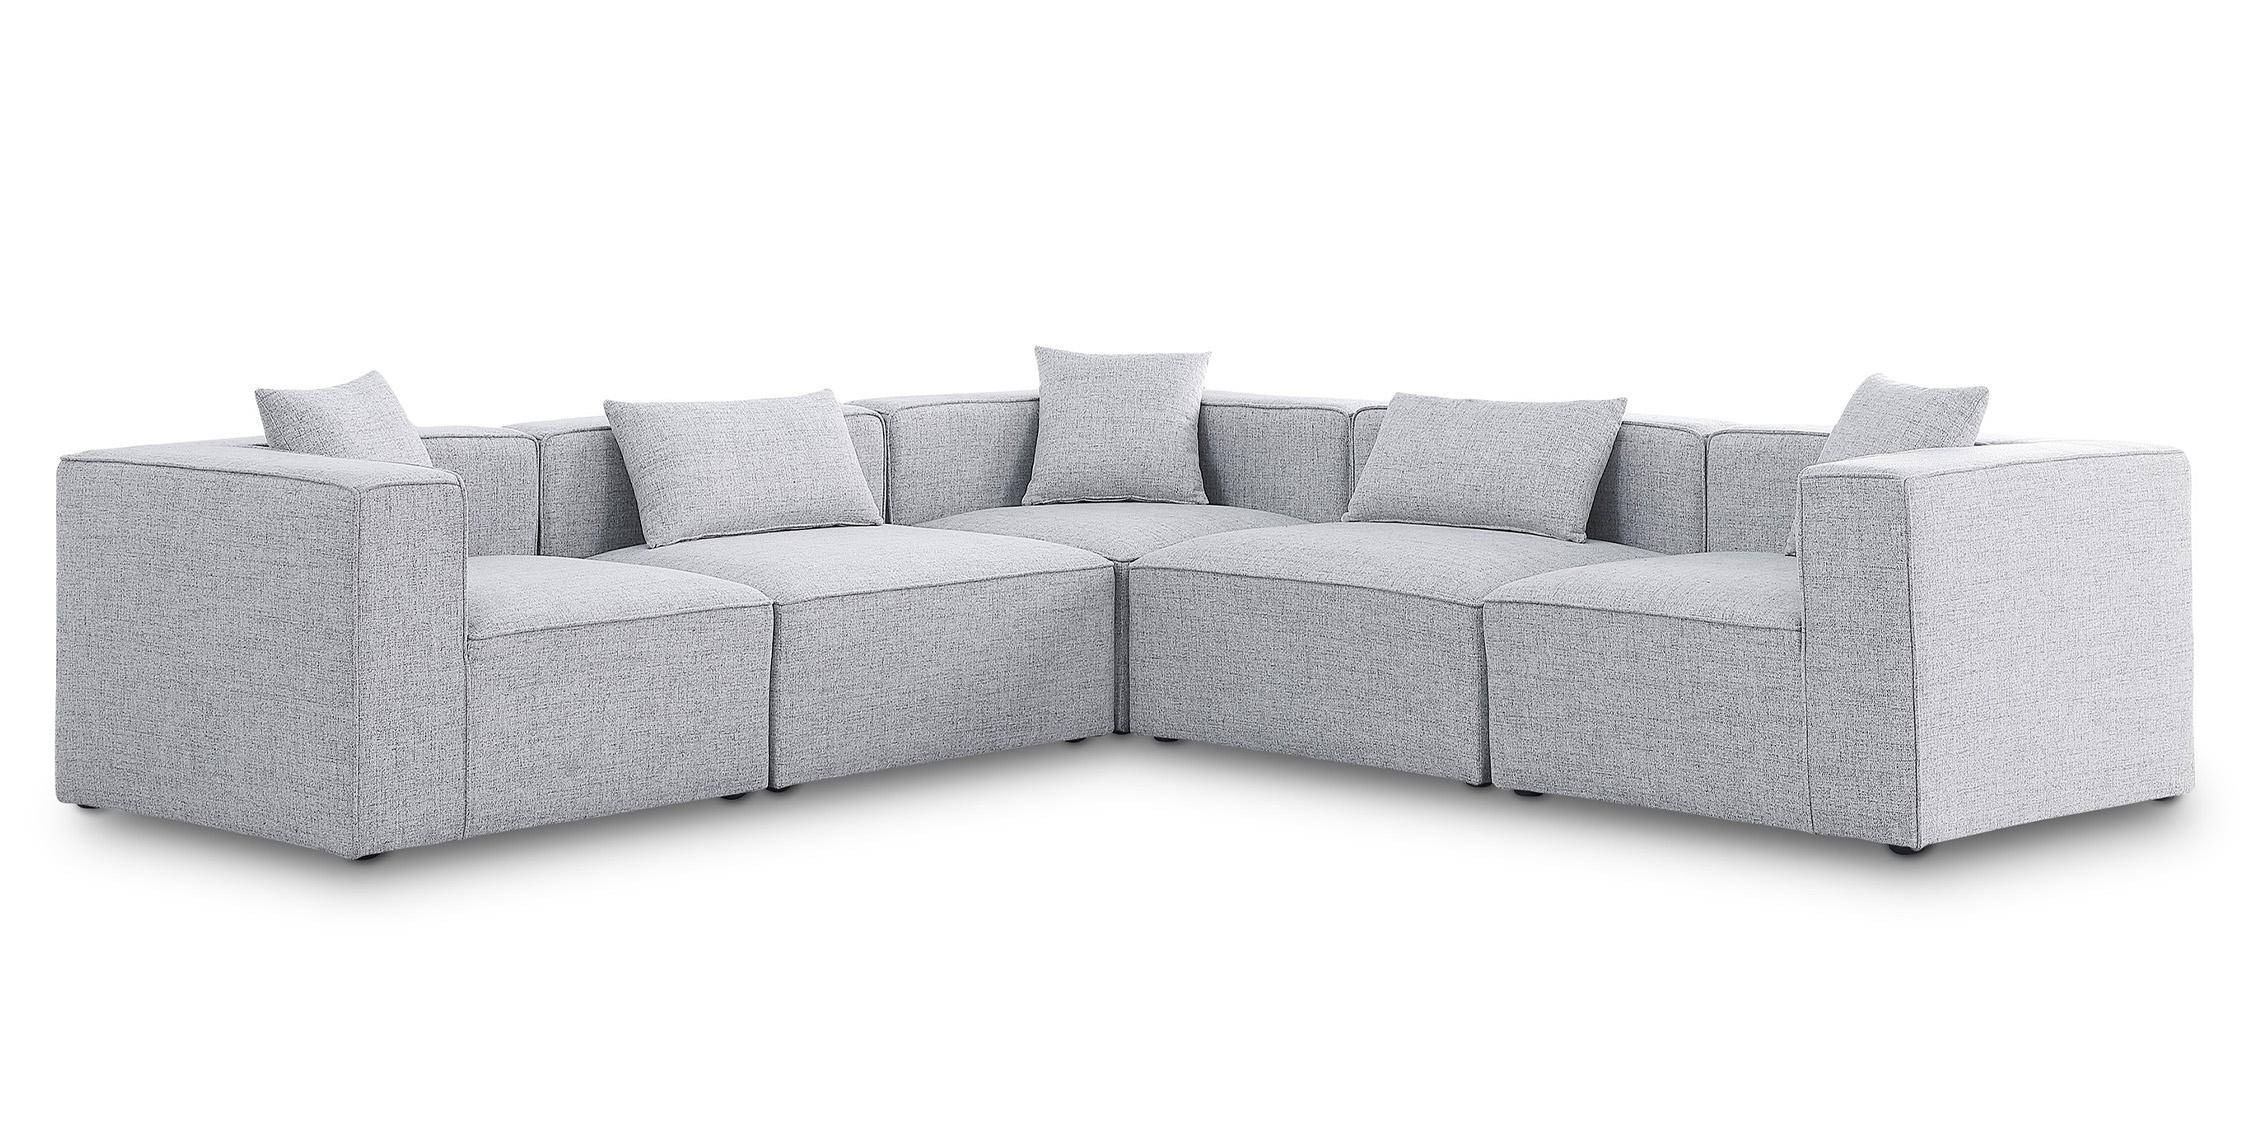 Contemporary, Modern Modular Sectional Sofa CUBE 630Grey-Sec5C 630Grey-Sec5C in Gray Linen